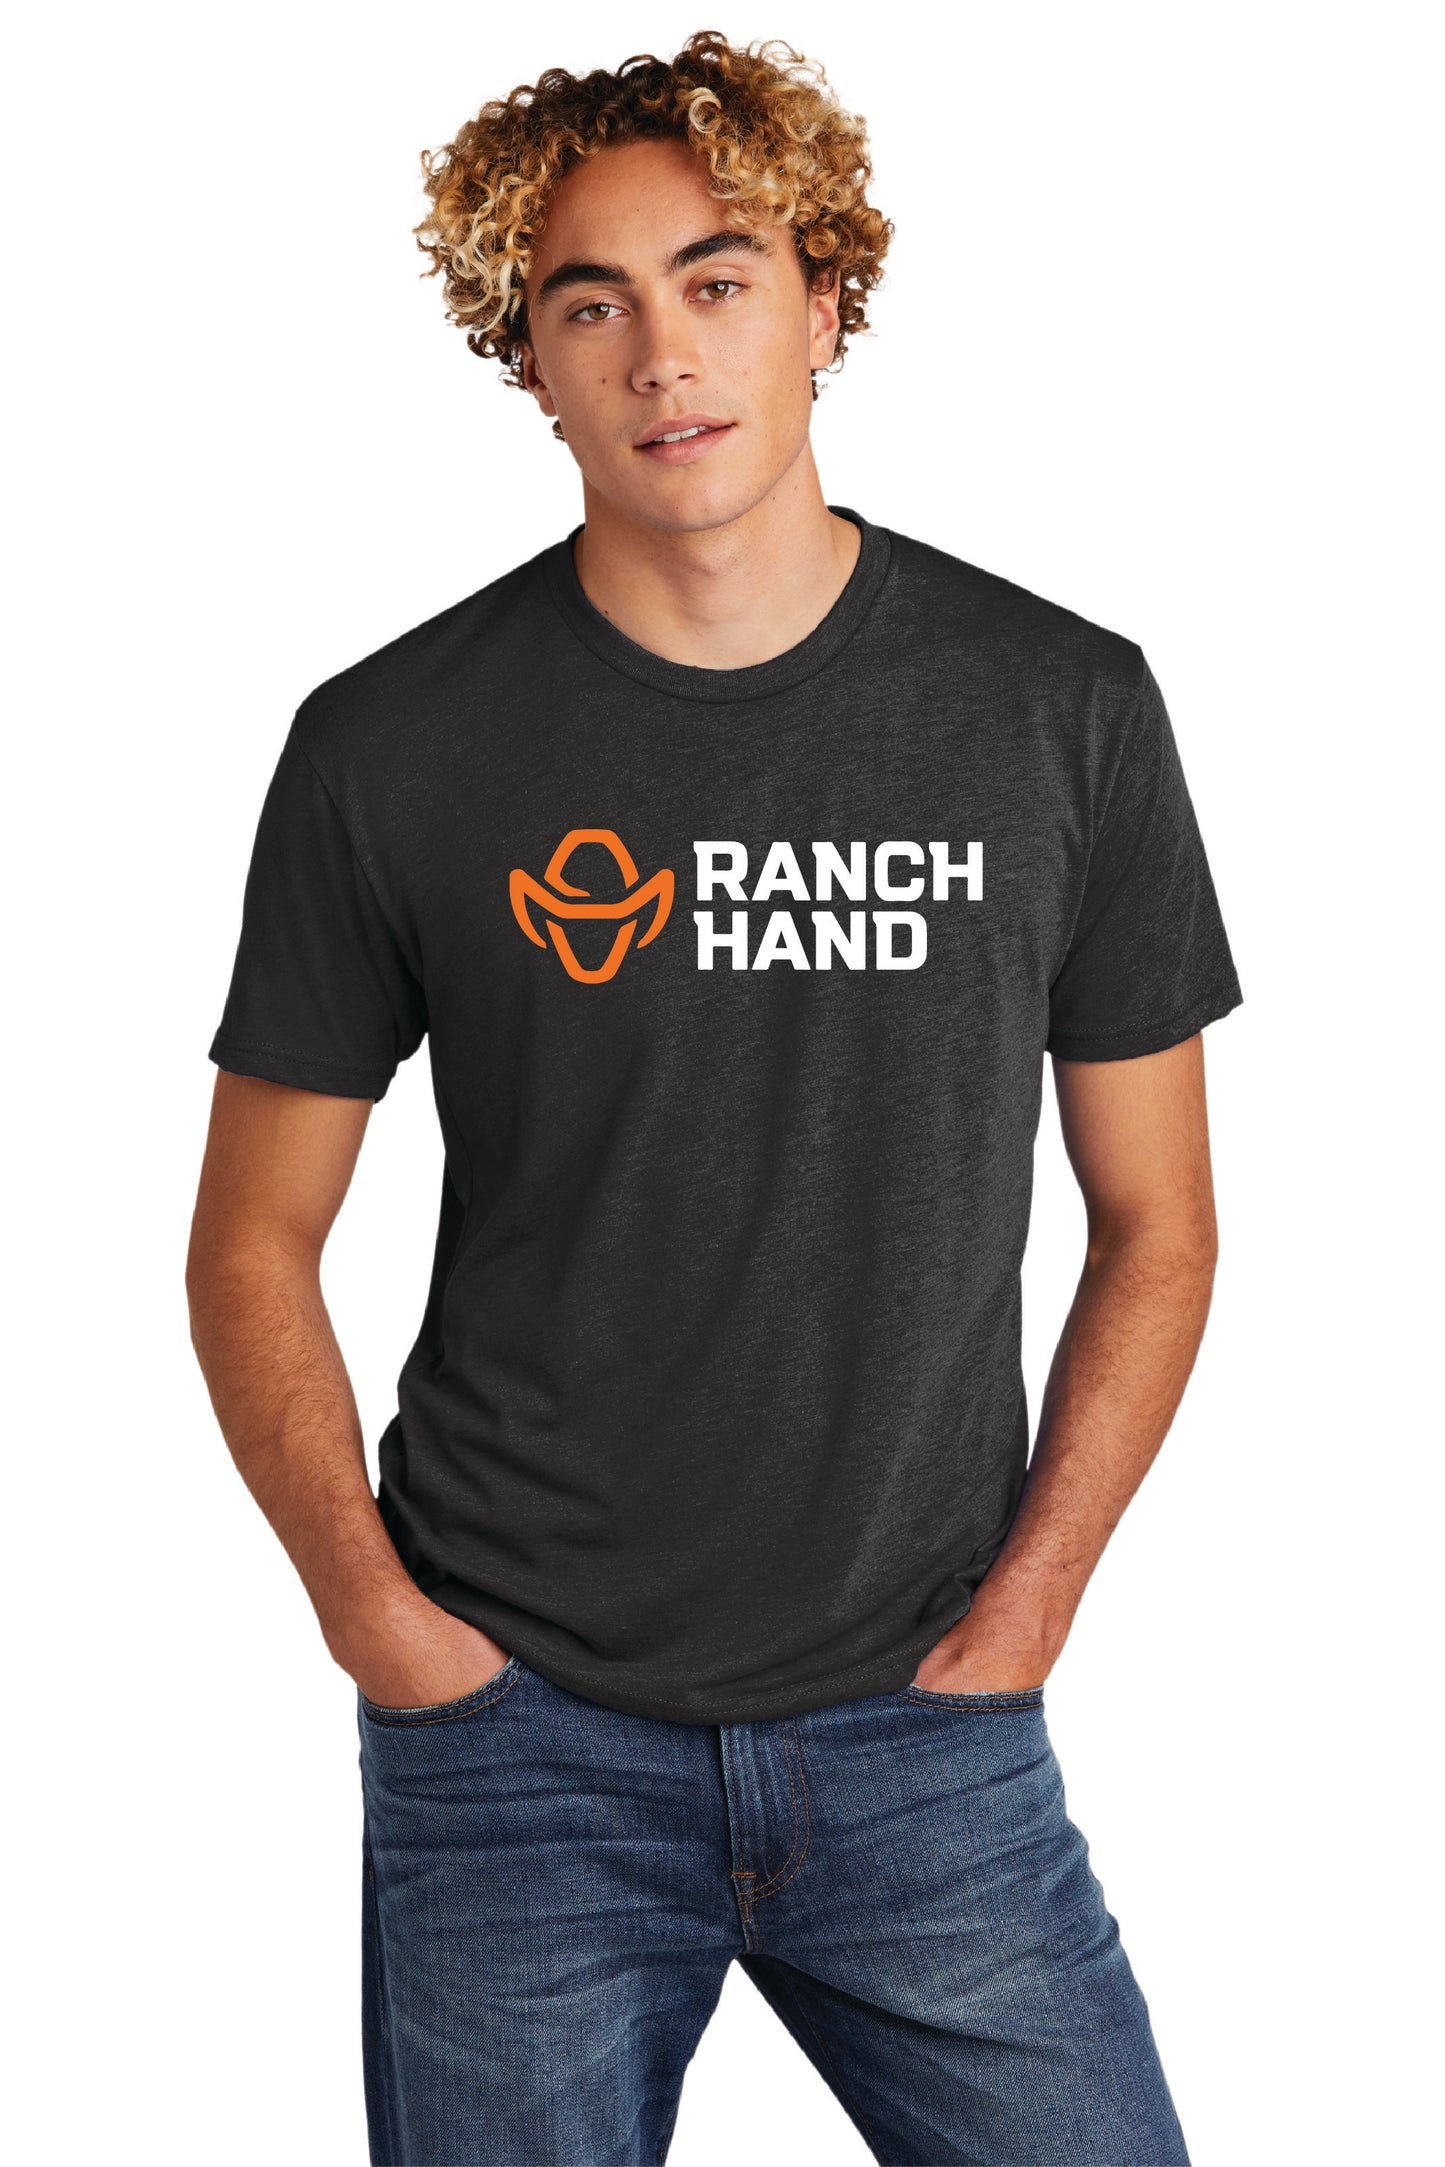 Man Wearing Vintage Black Ranch Hand Essential T-shirt